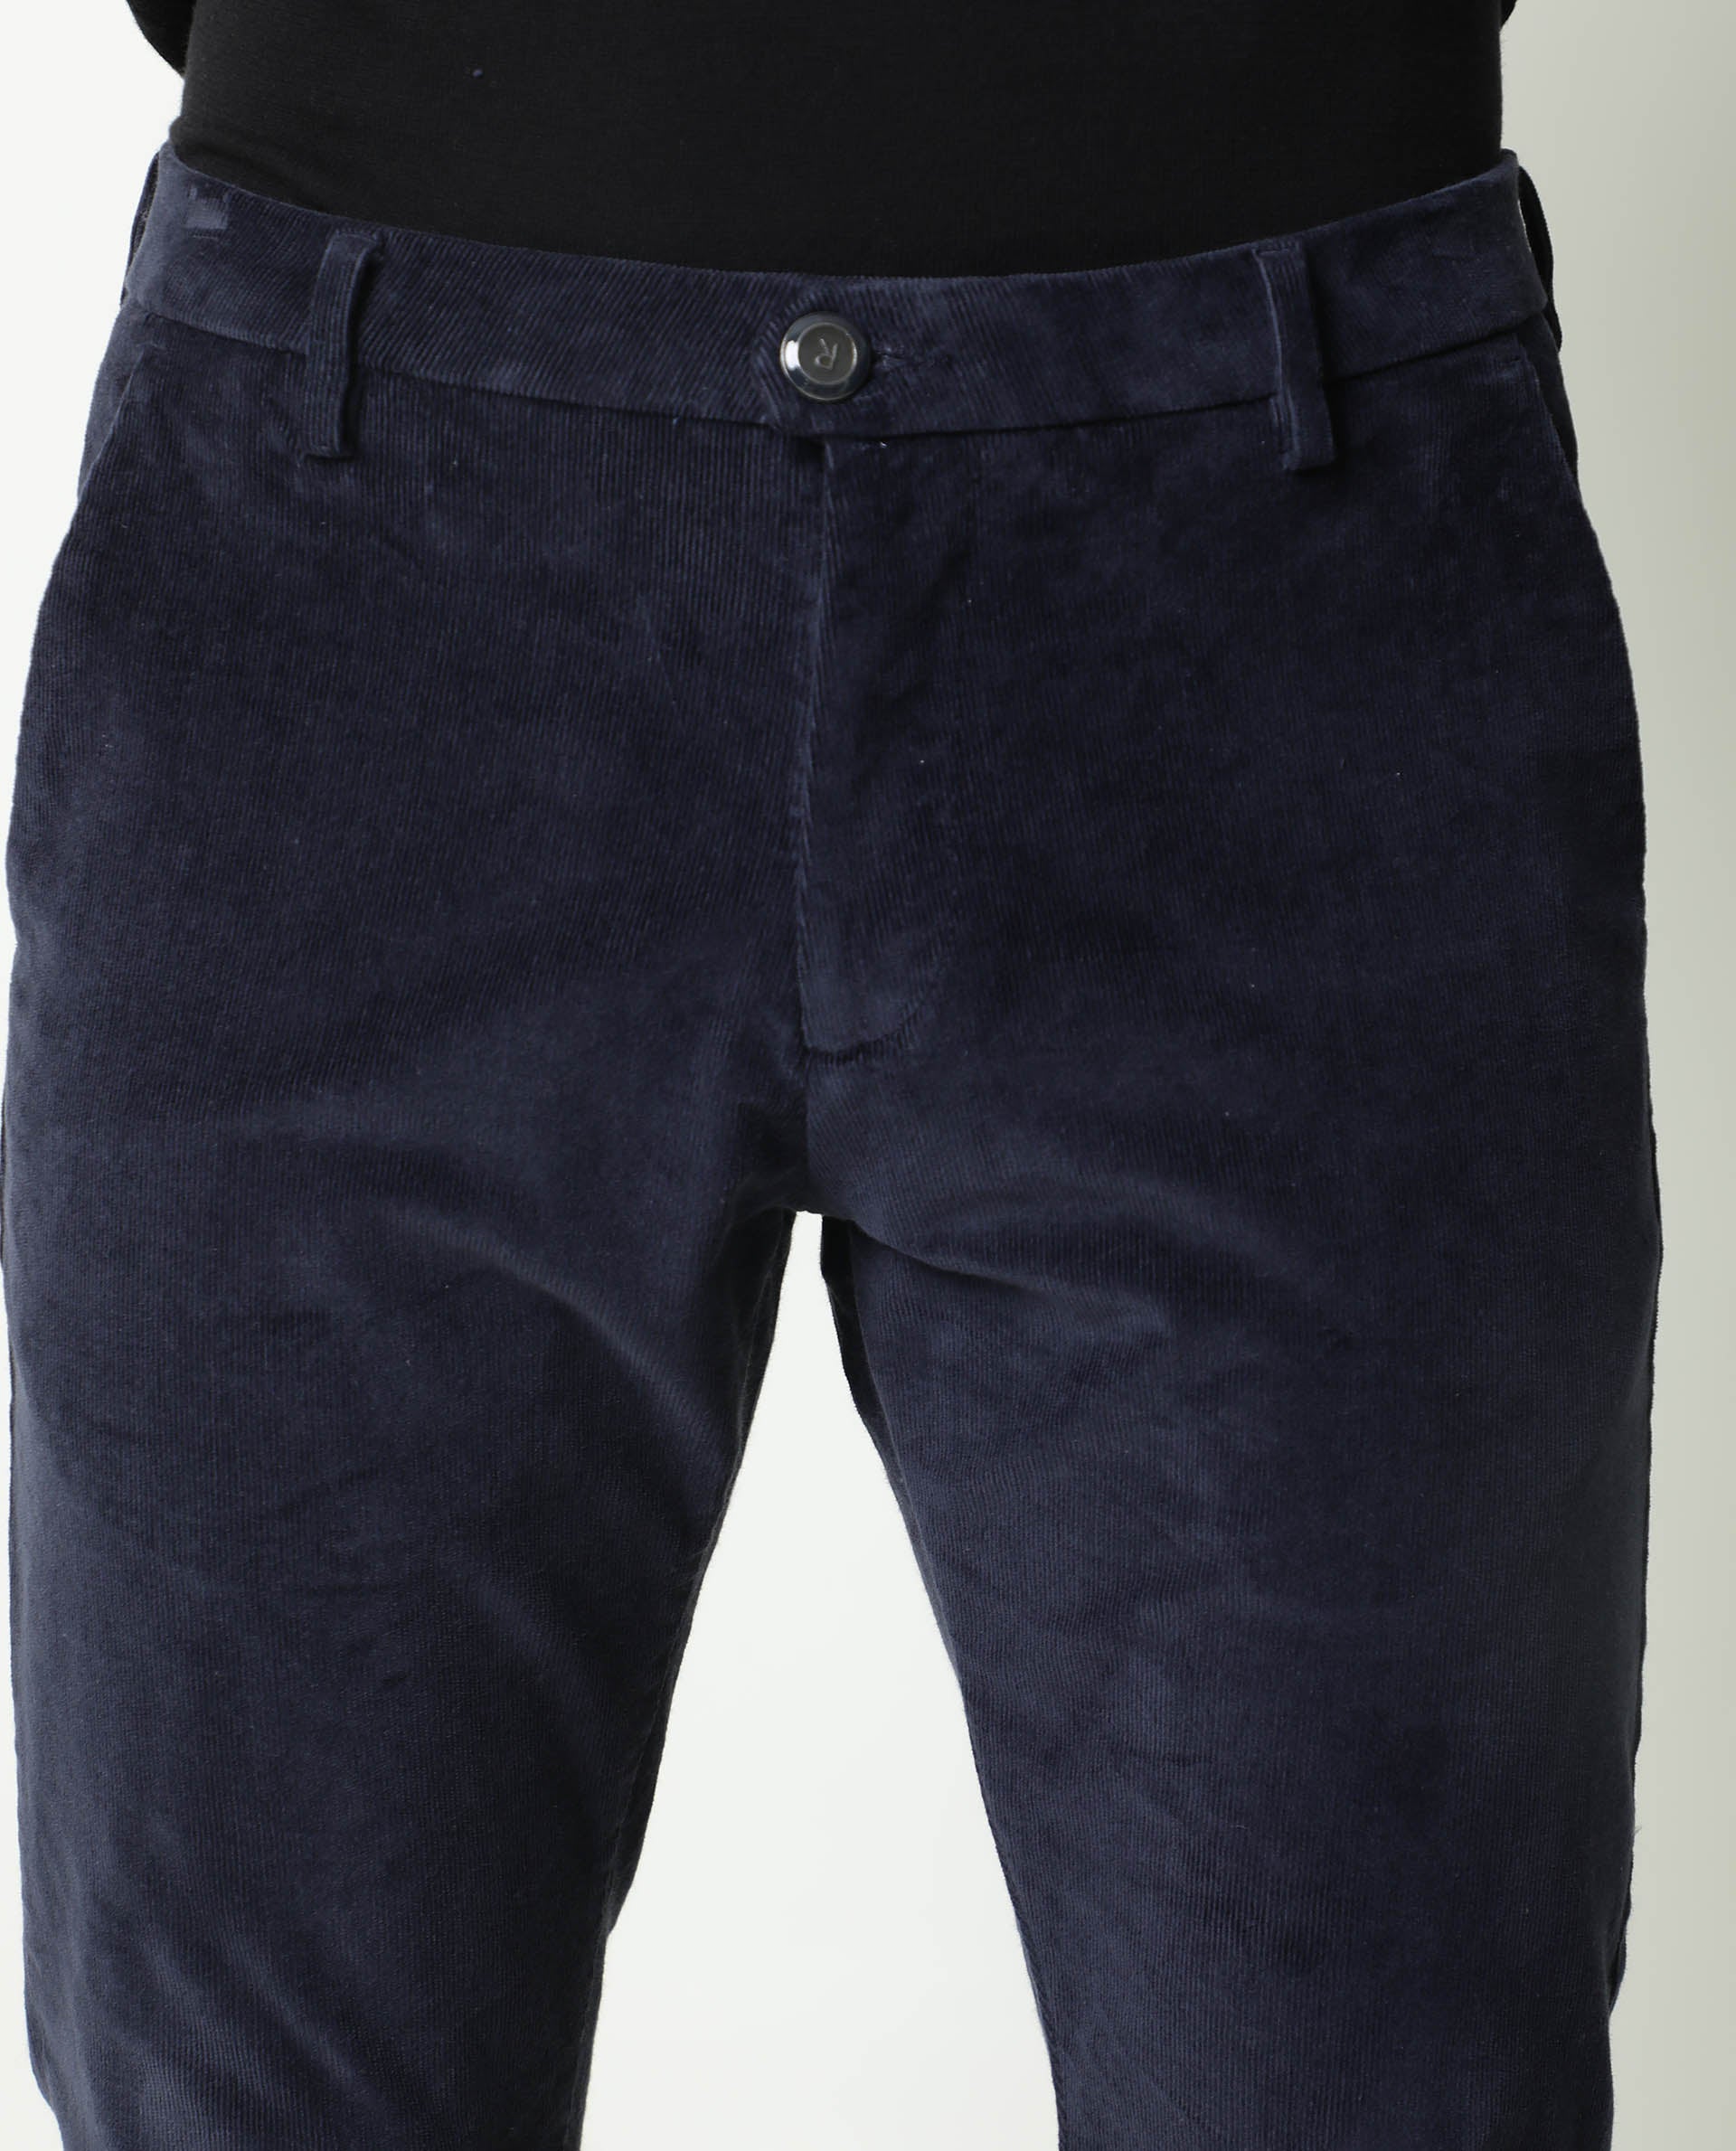 Buy Black Trousers & Pants for Men by CROCODILE Online | Ajio.com